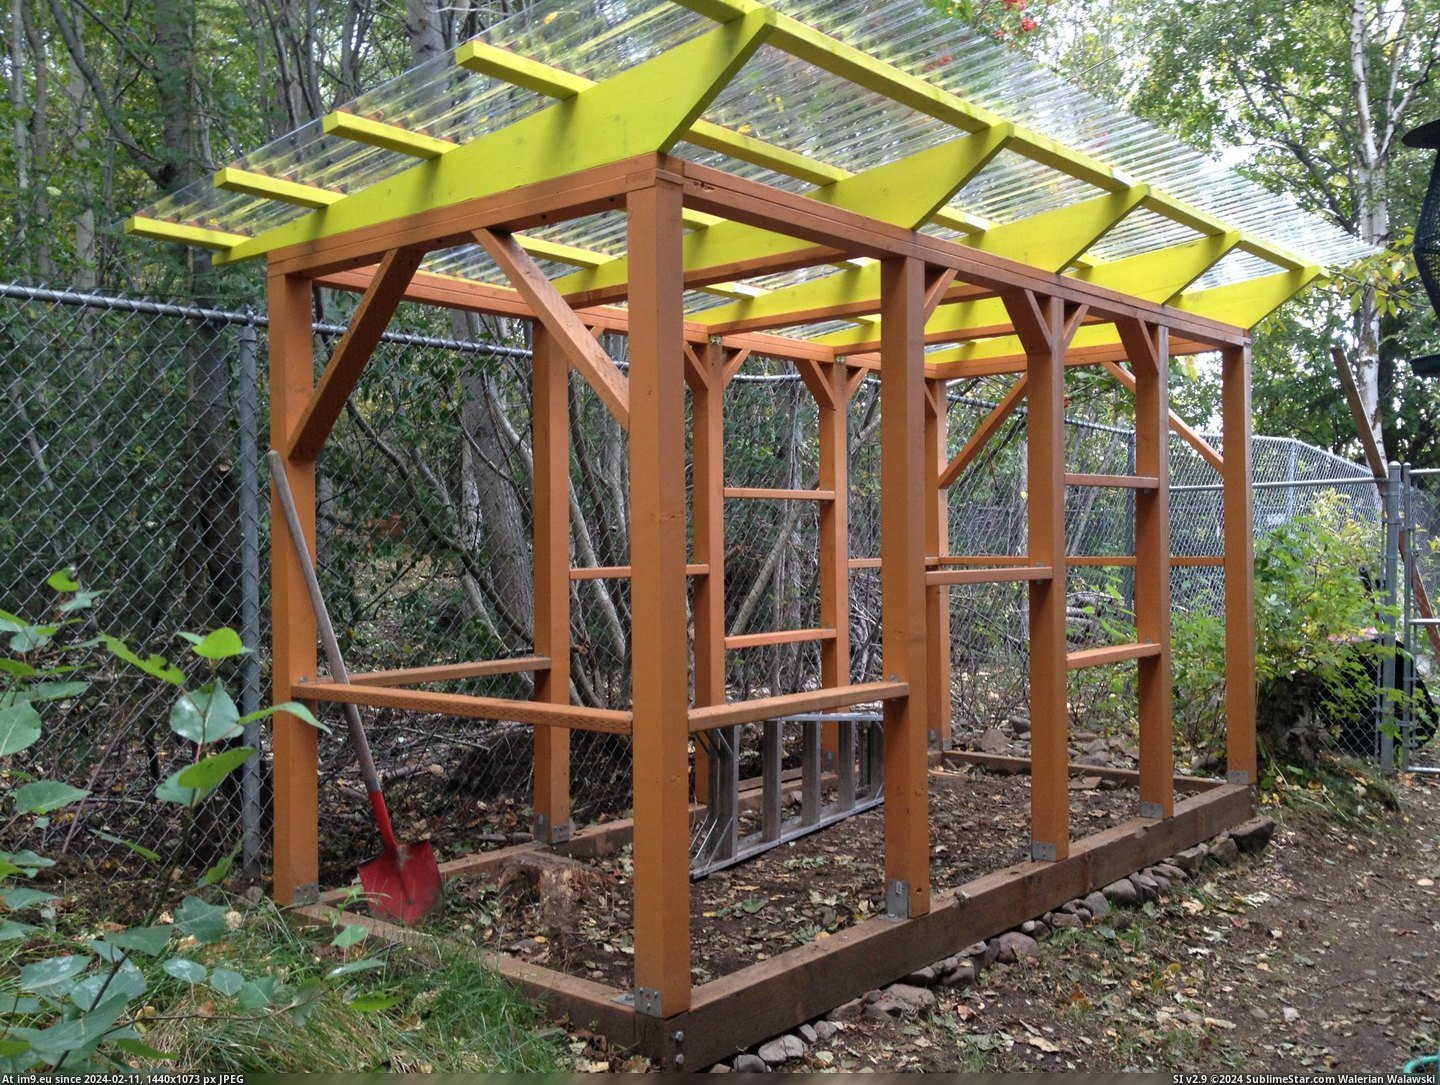 #Share #Thought #Chicken #Coop #Built #Alaska [Pics] I built a chicken coop at my home in Alaska and I thought I'd share 1 Pic. (Изображение из альбом My r/PICS favs))